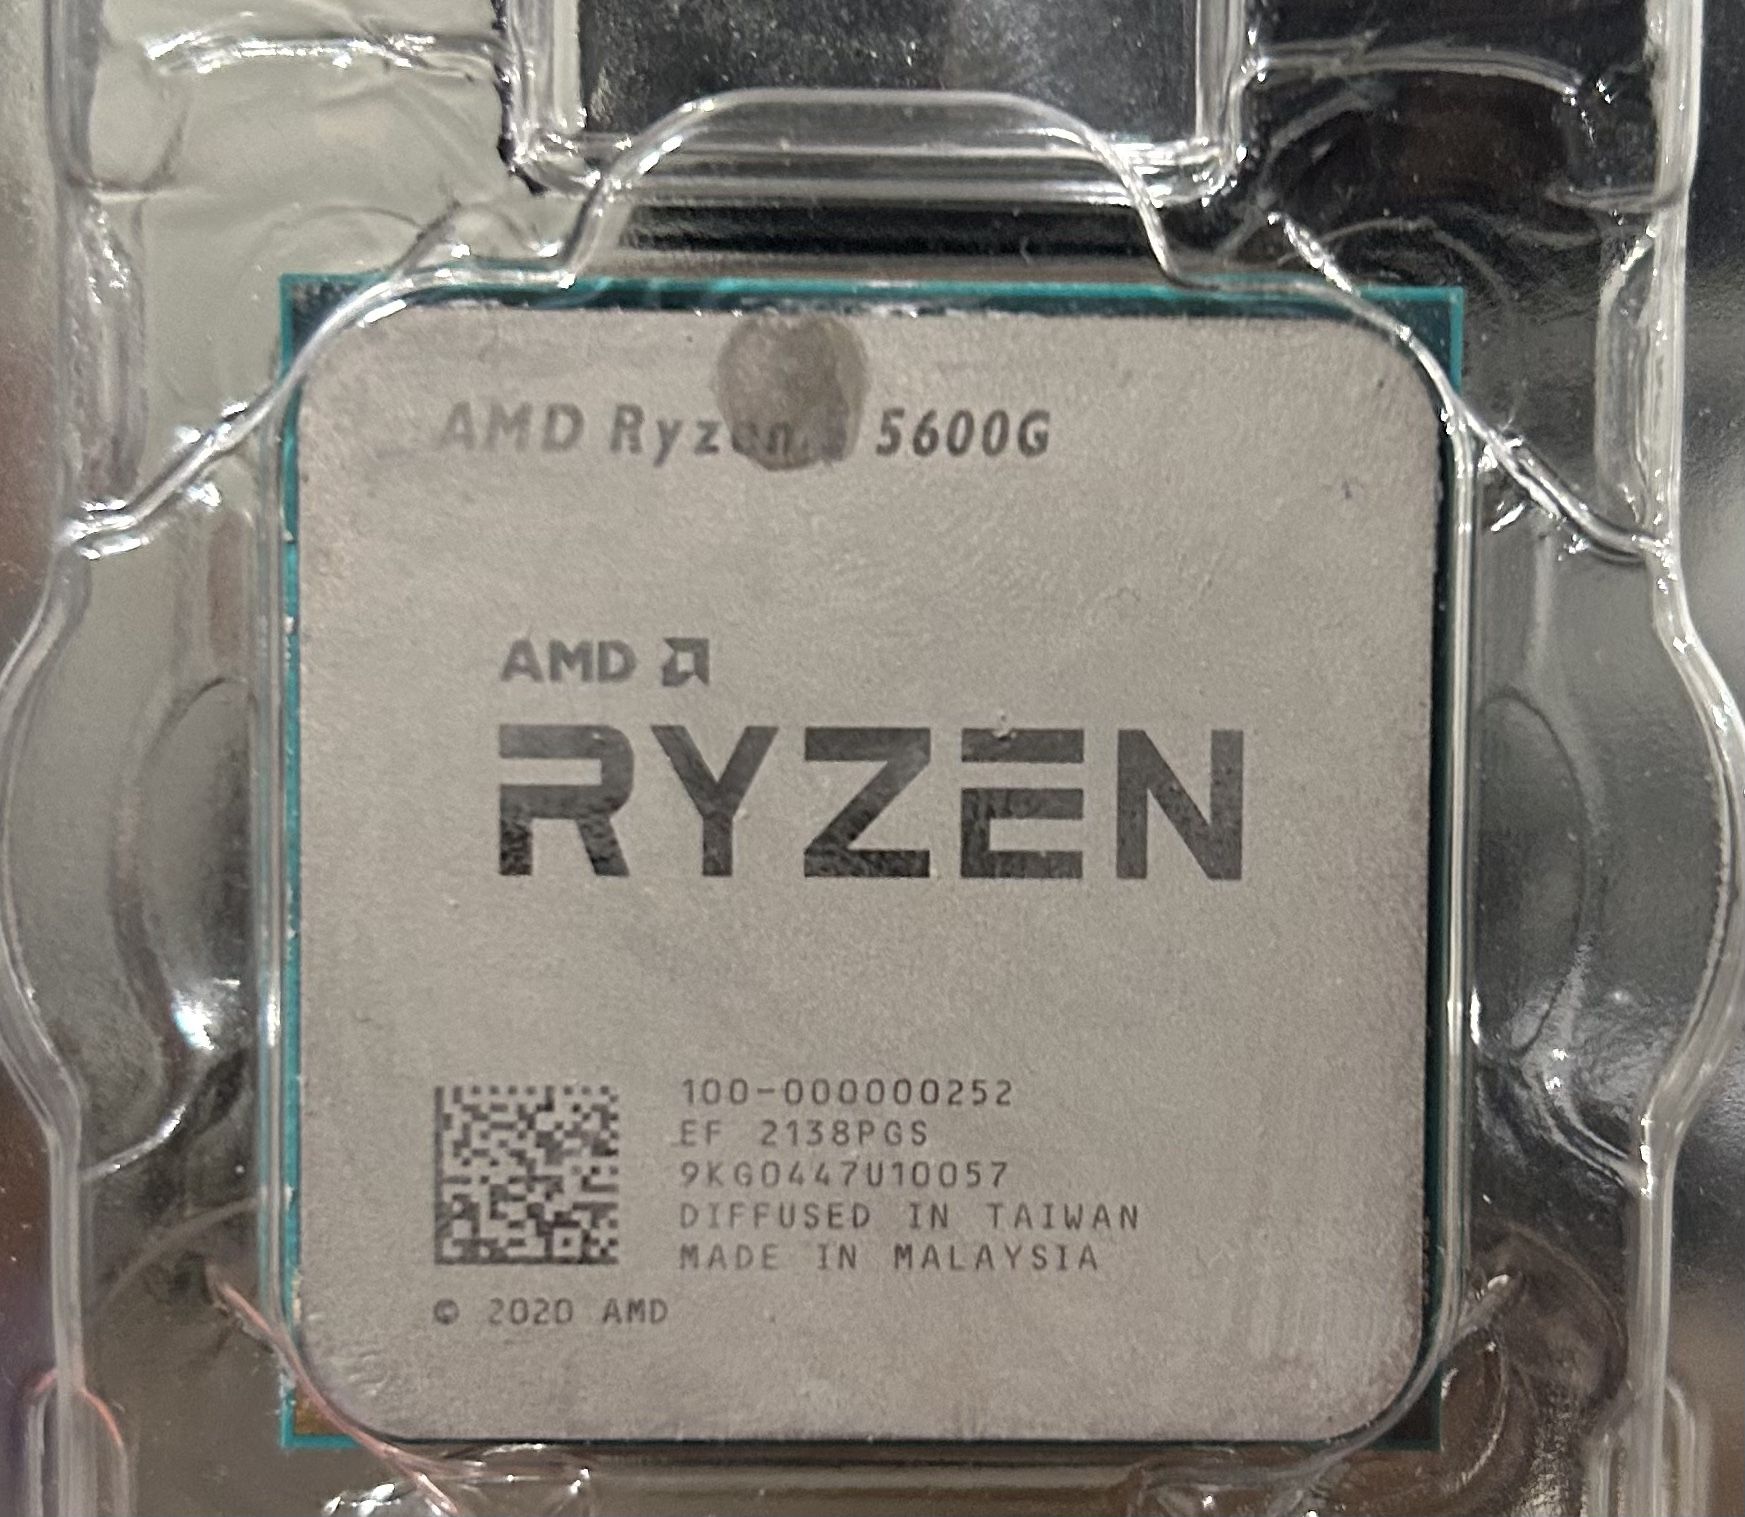 Ryzen 5 5600G (with cooler)